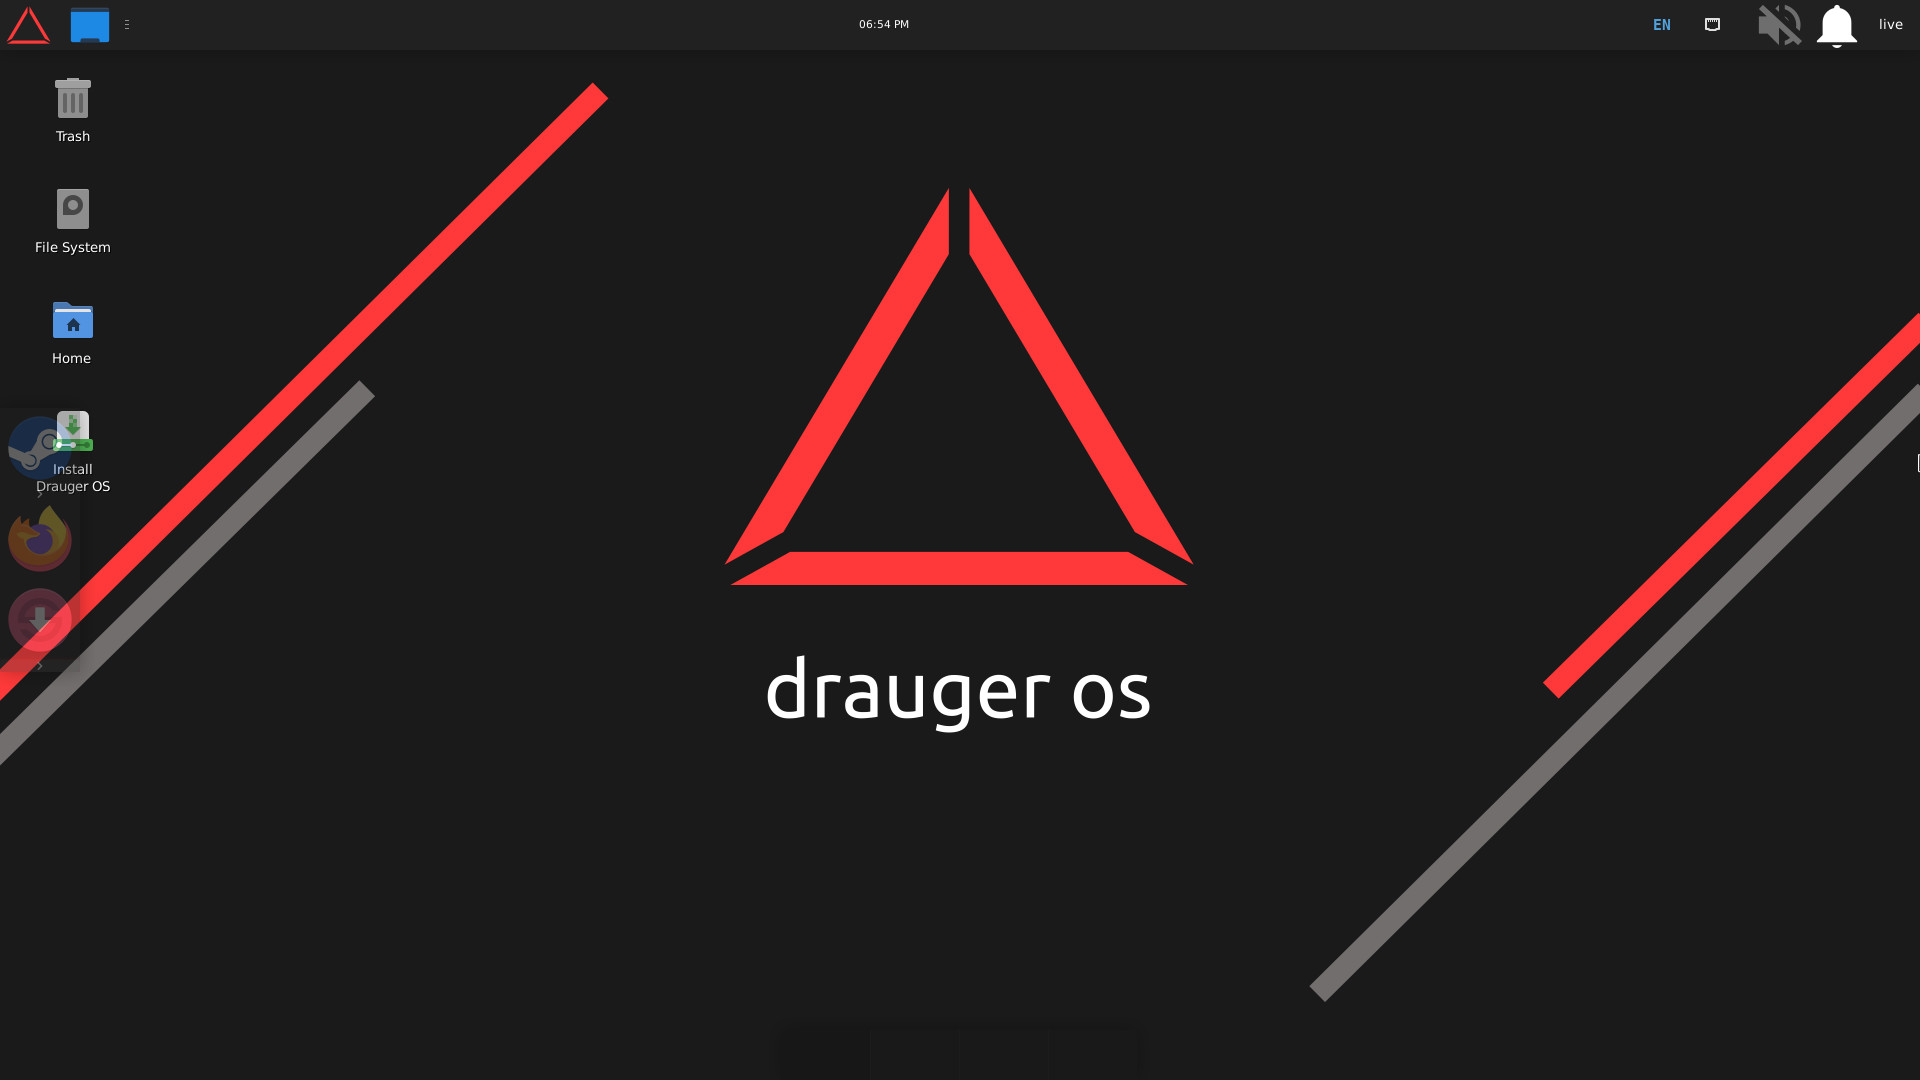 A Preview of the DraugerOS Desktop.